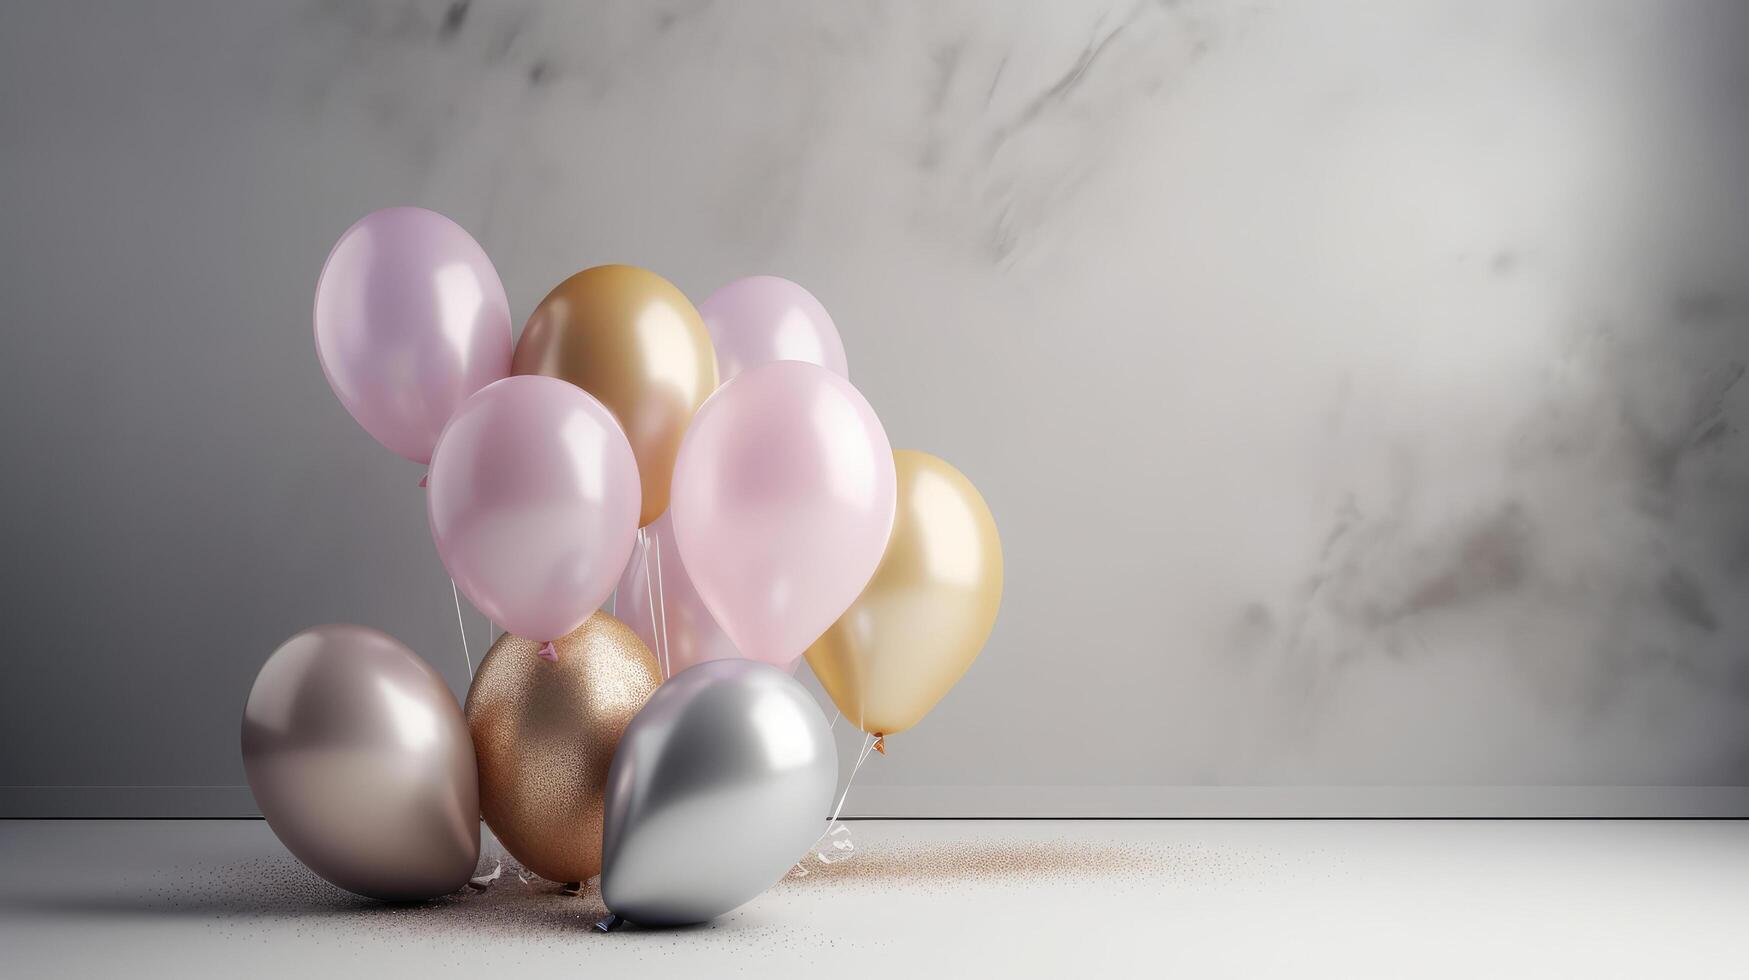 Happy Birthday Background with Balloons. Illustration photo